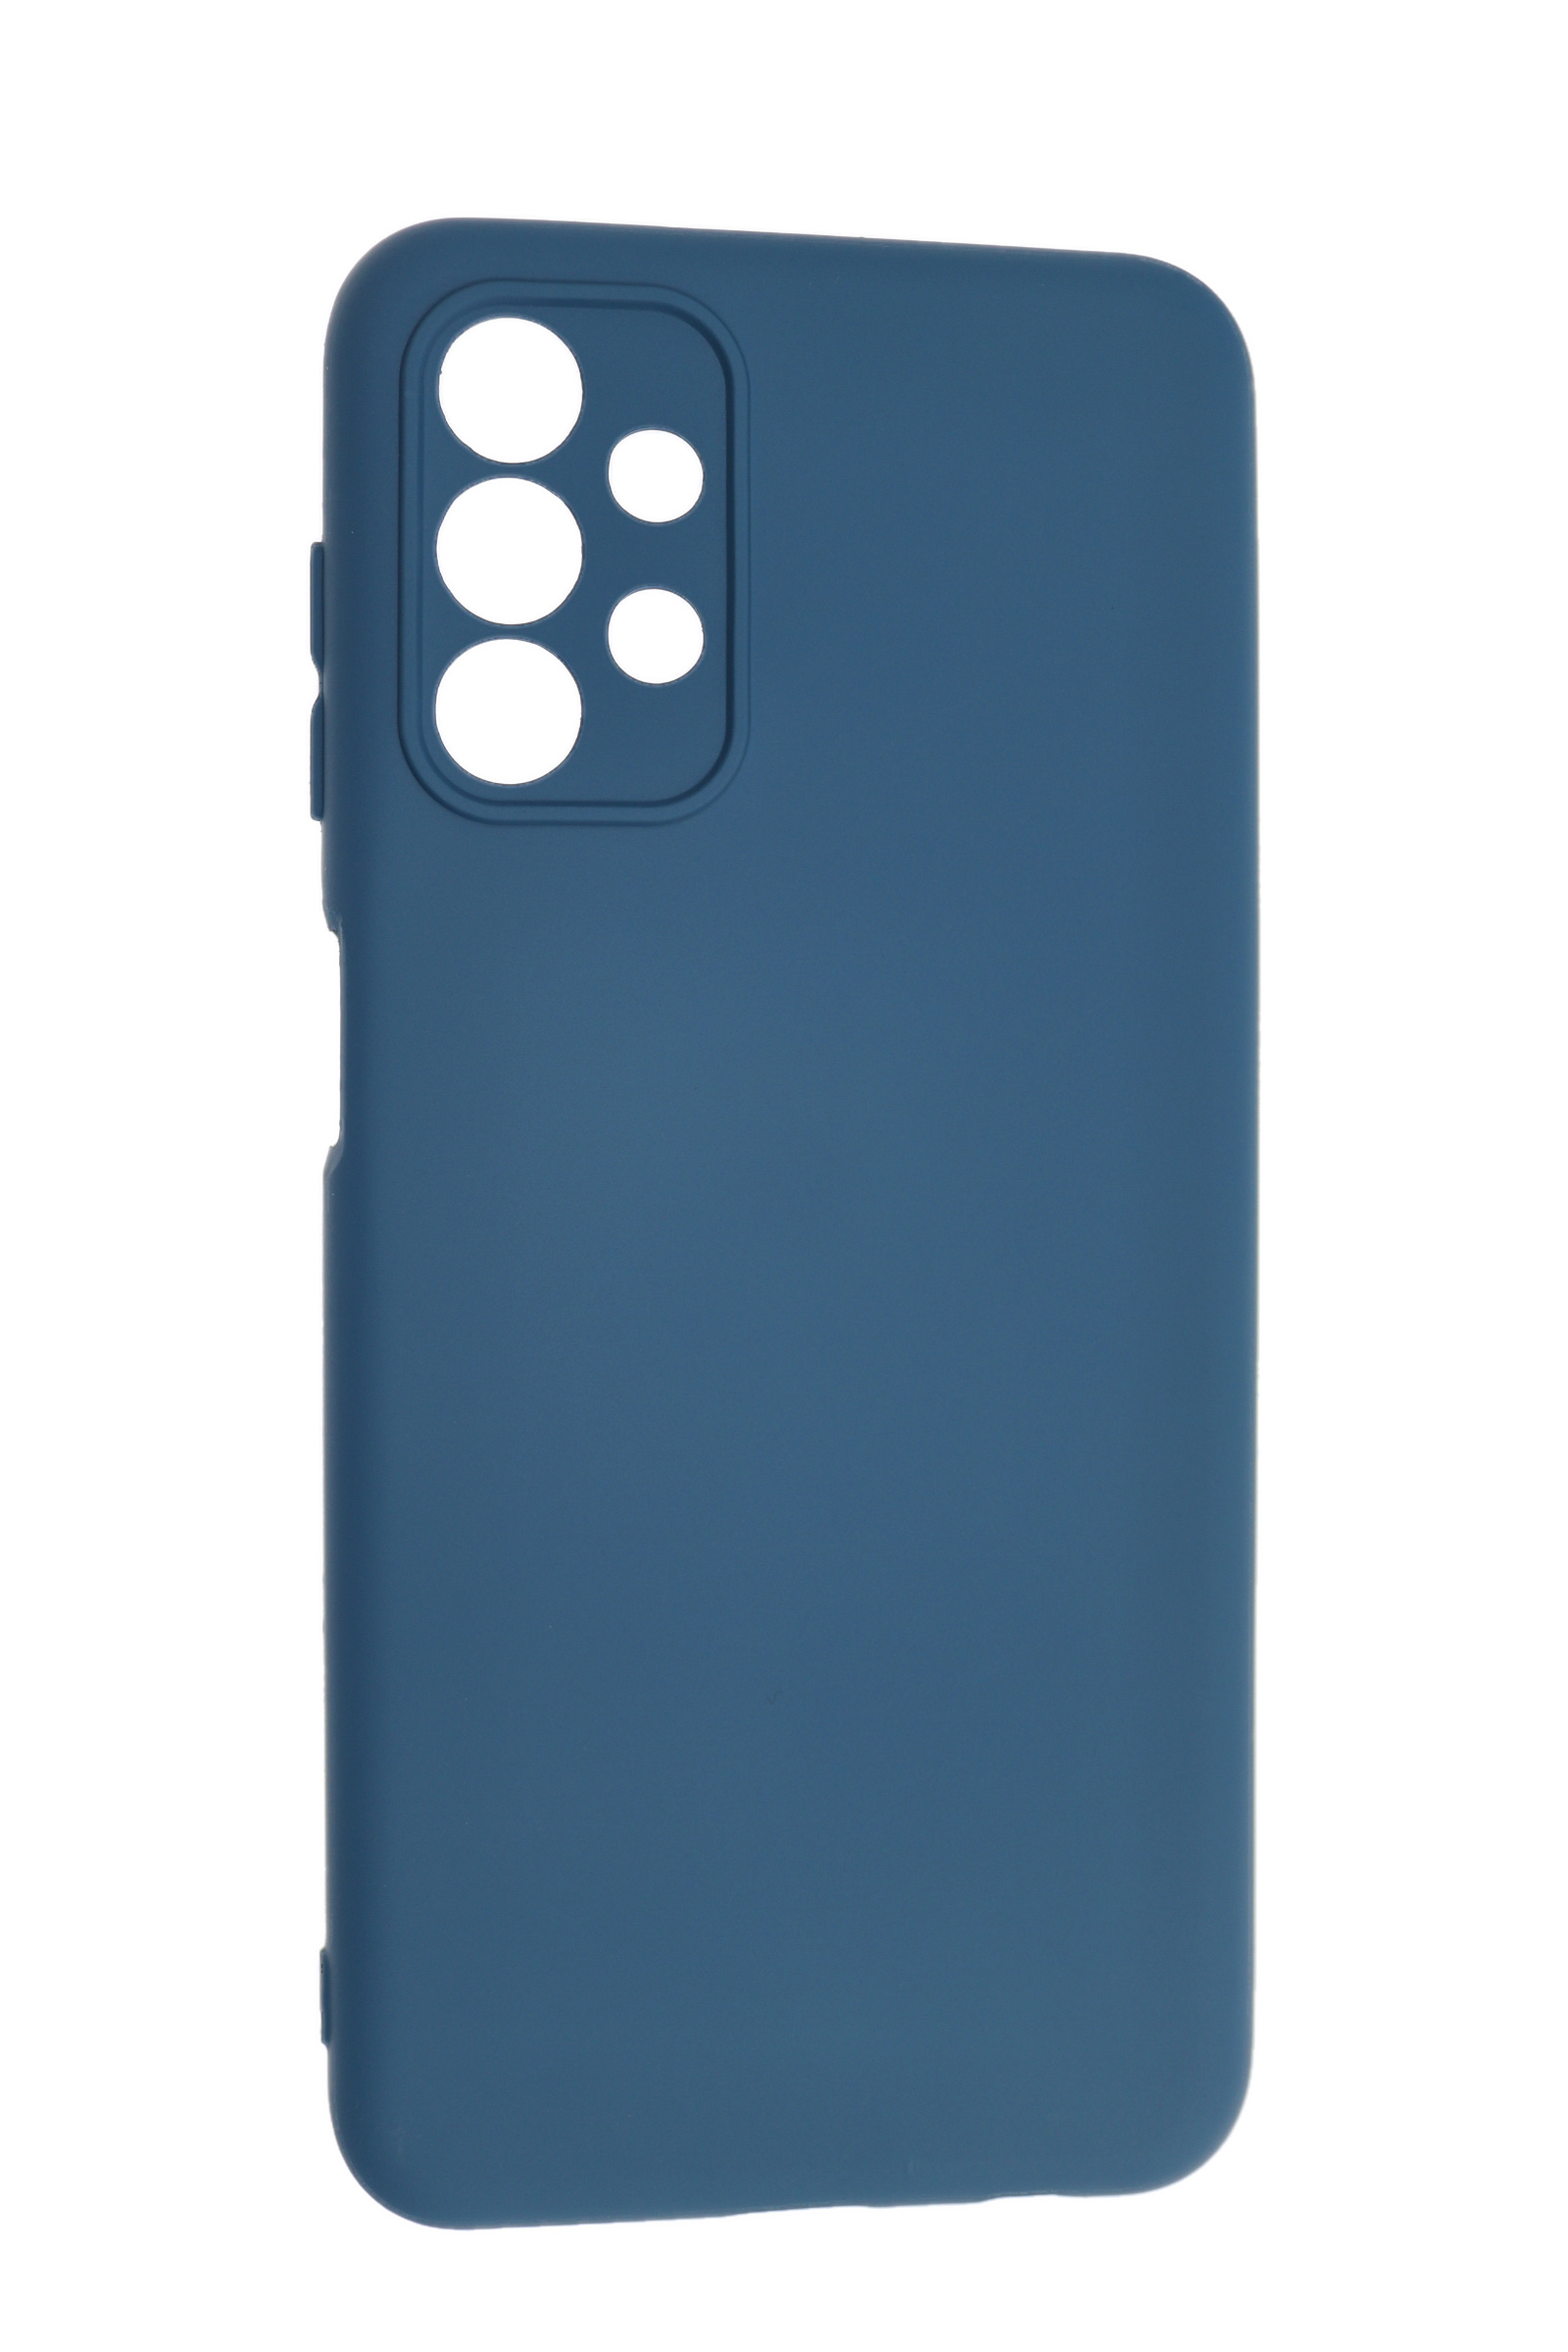 Galaxy Kobalt Backcover, A13, A13 Galaxy 4G, Galaxy NE, Samsung, JAMCOVER Case, A13 Silikon